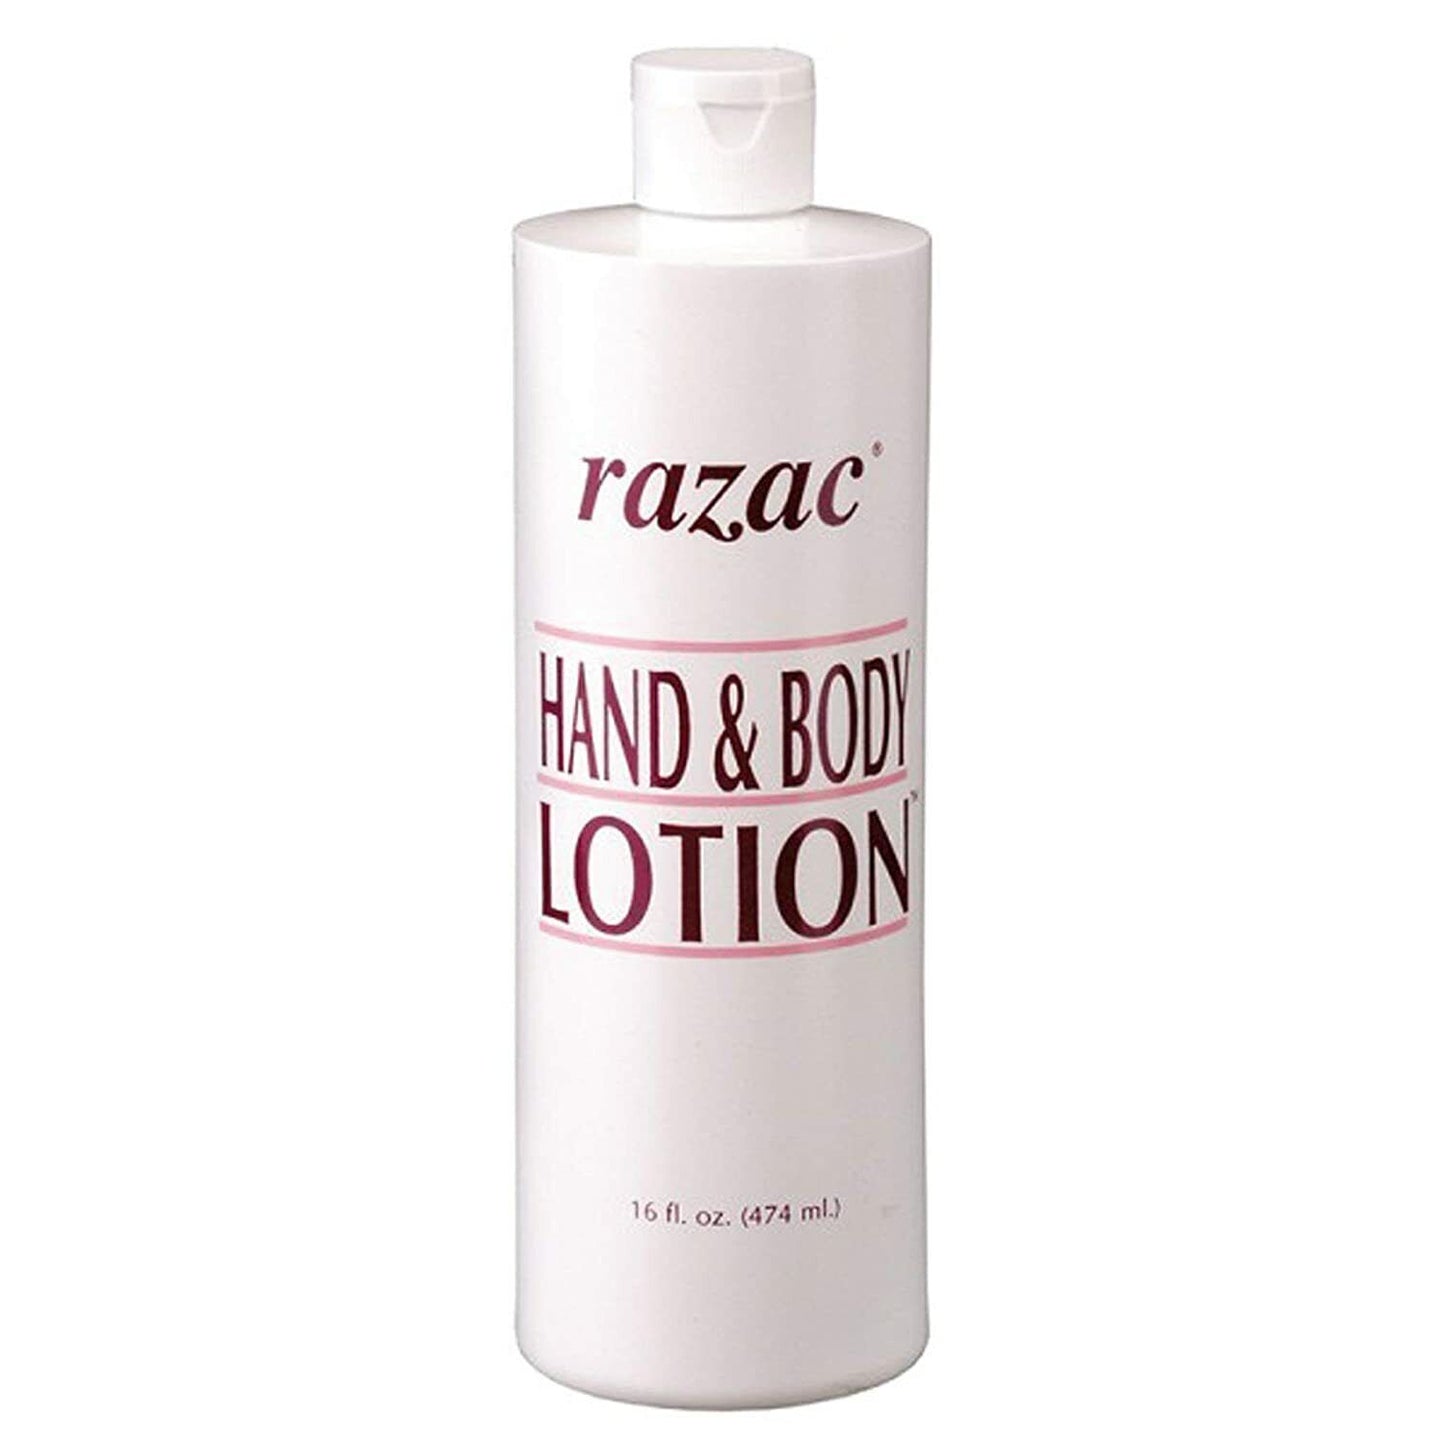 Razac hand & body lotion